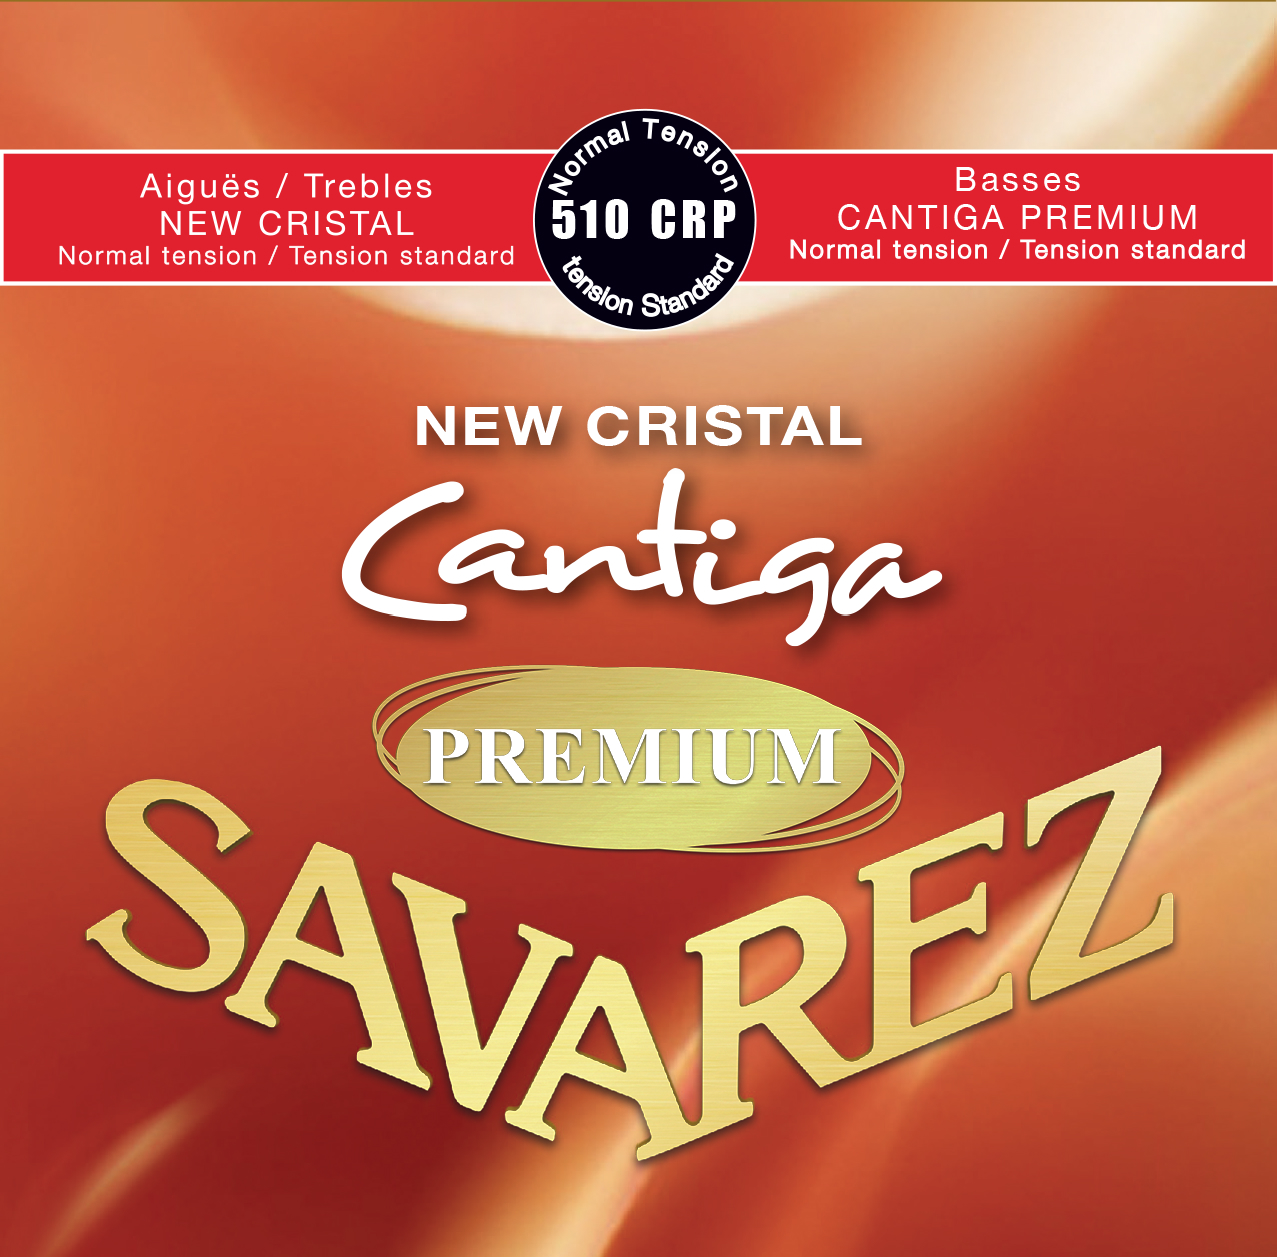 NEW CRISTAL CANTIGA PREMIUM MIXED TENSION 510CRJP | Savarez